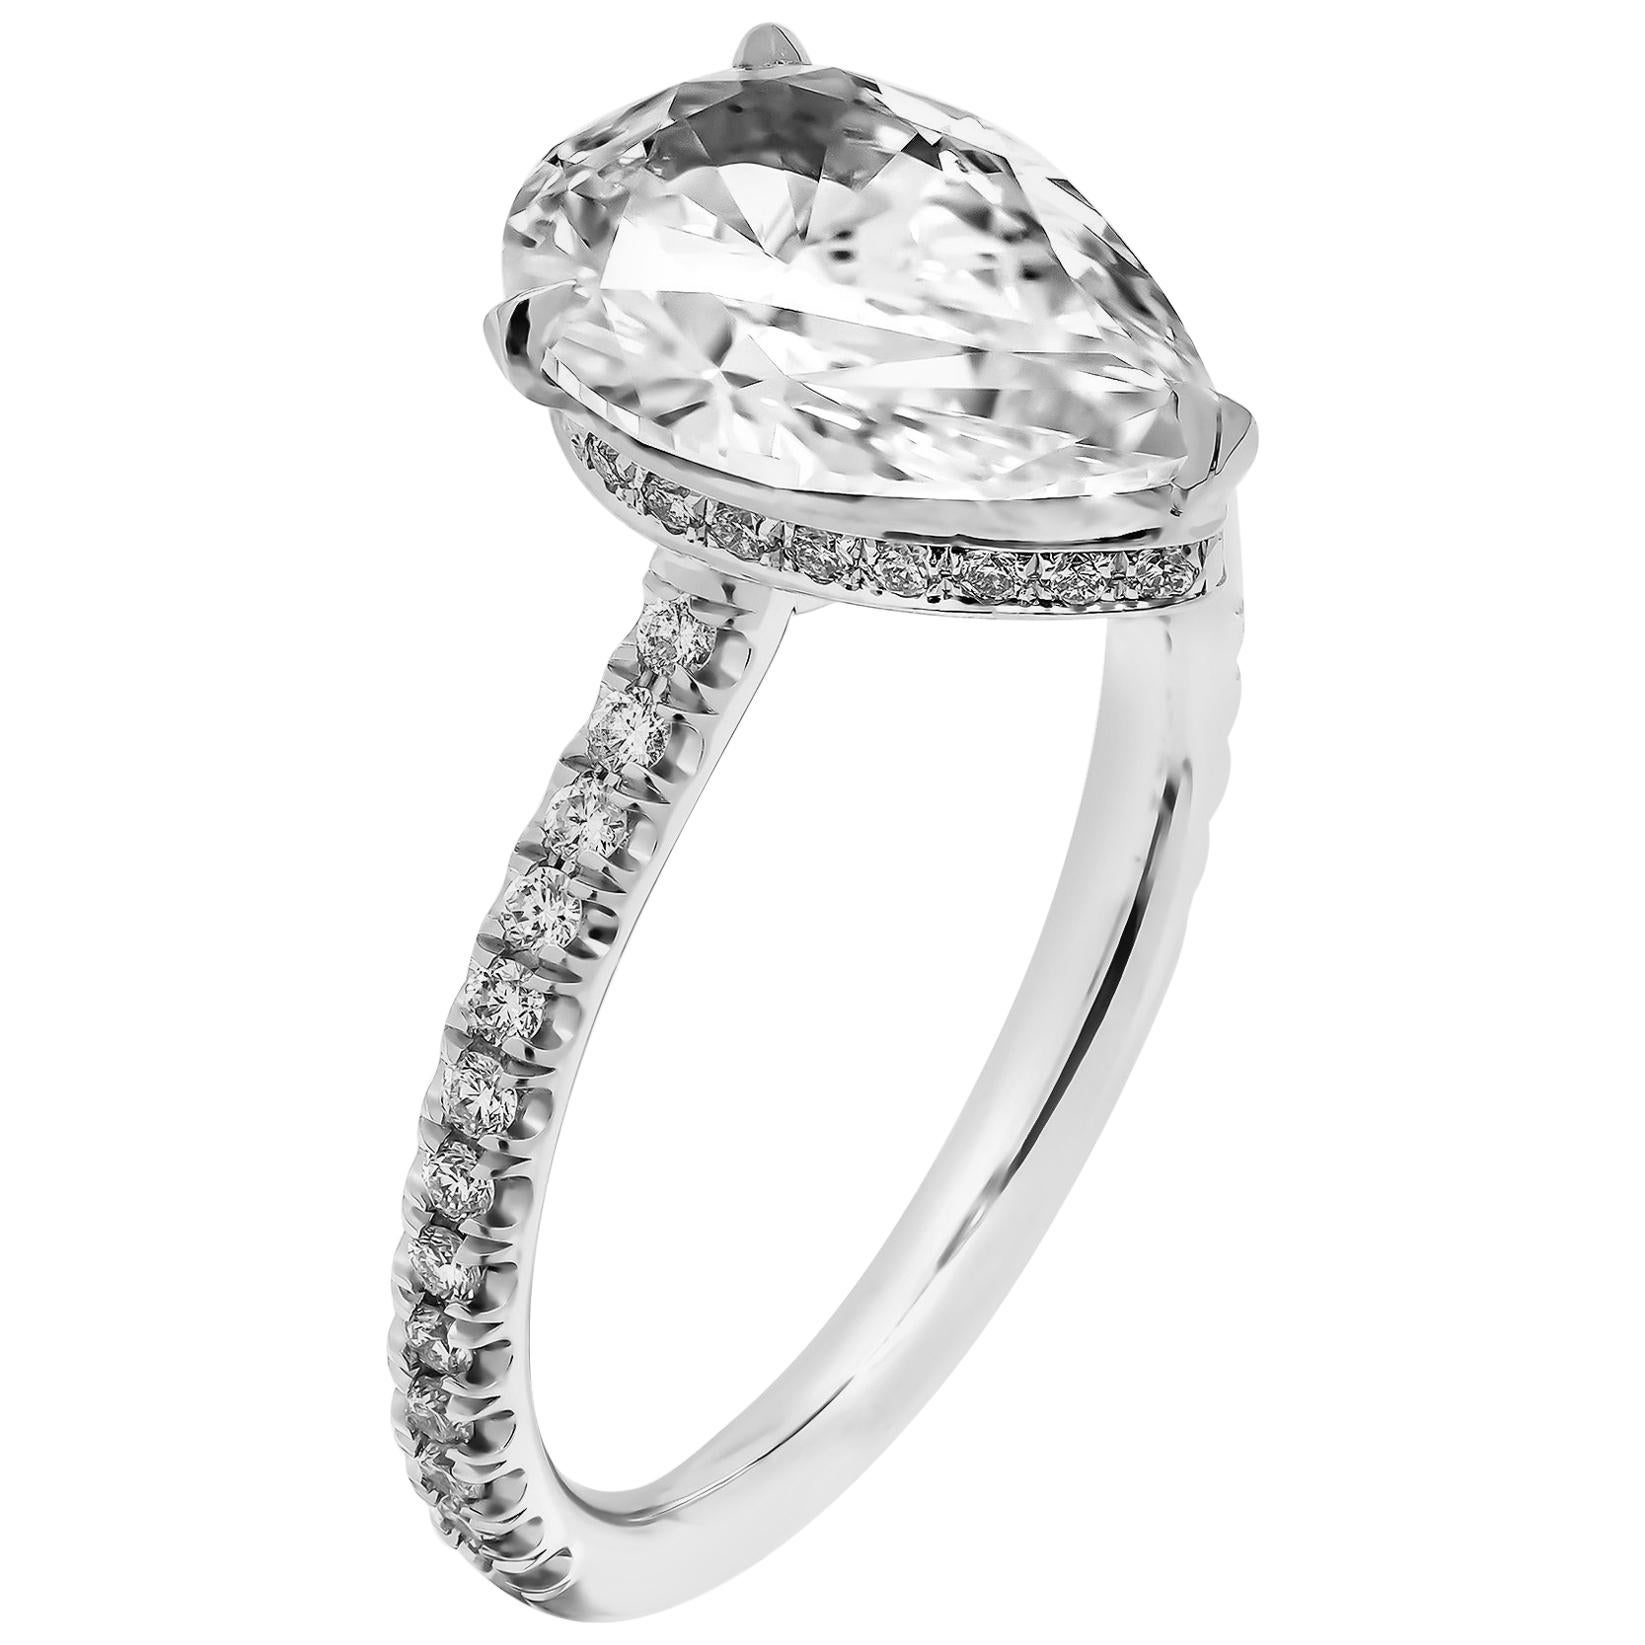 GIA Certified Pear Shaped 2.02 Carat Diamond Ring